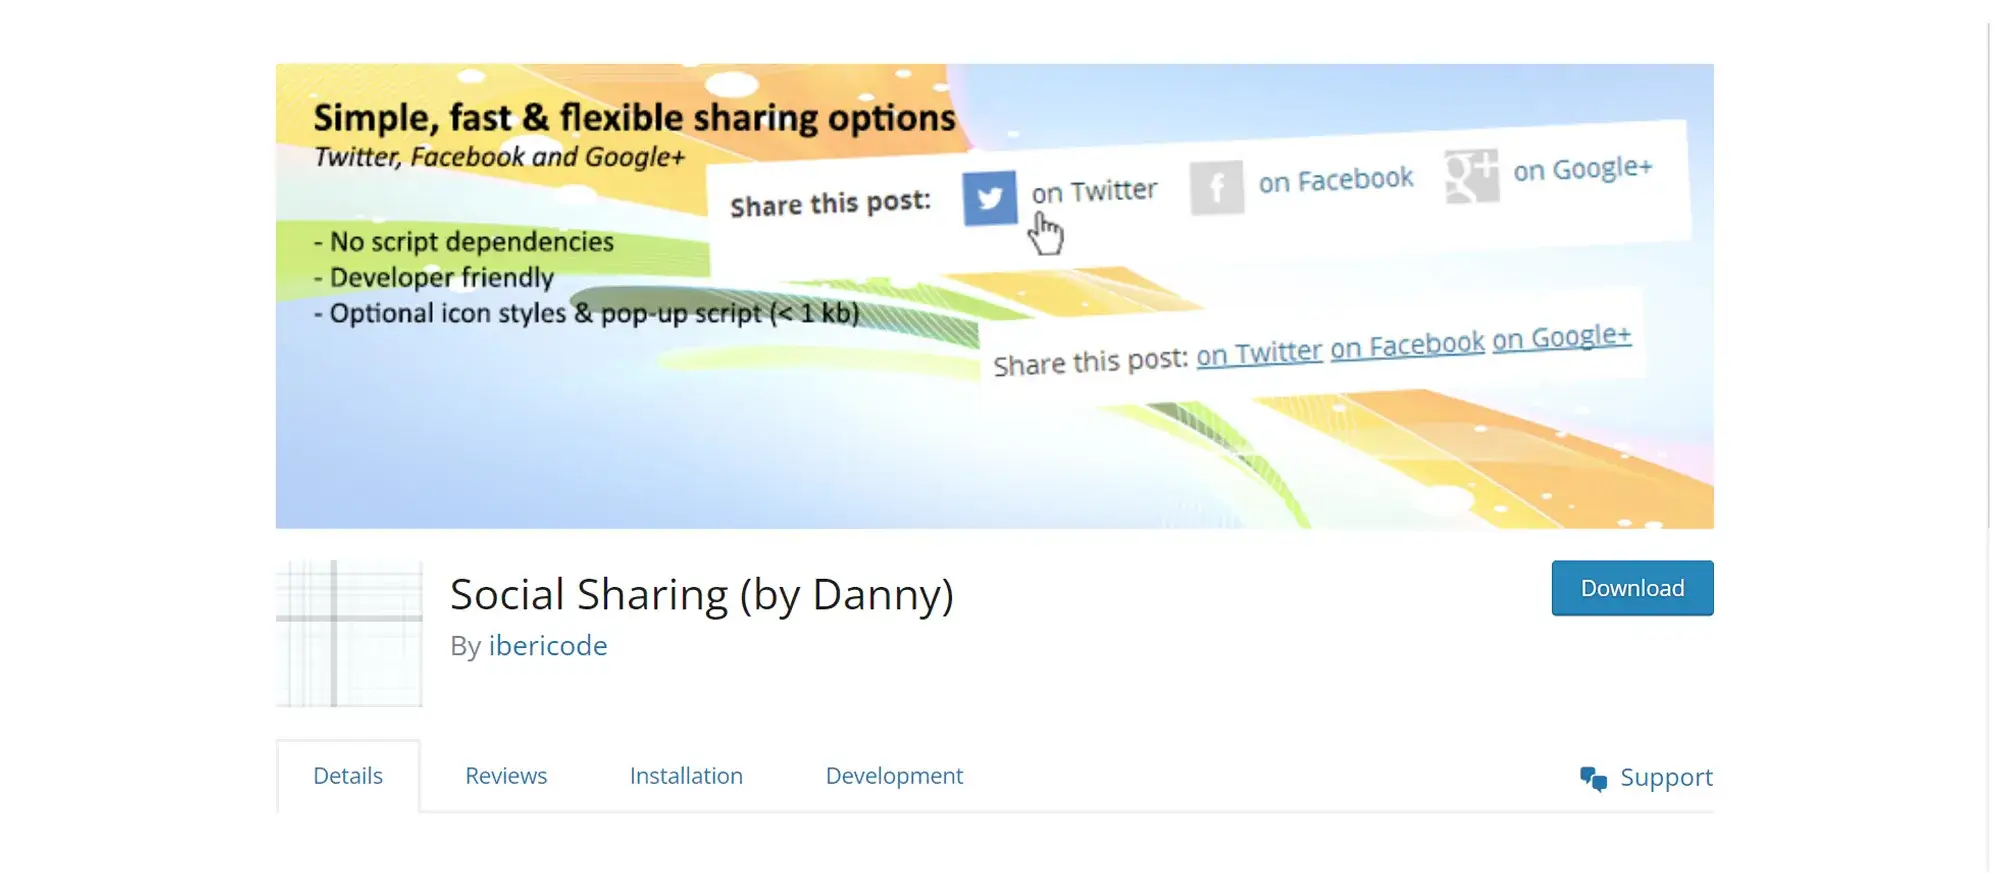 Social Sharing By Danny